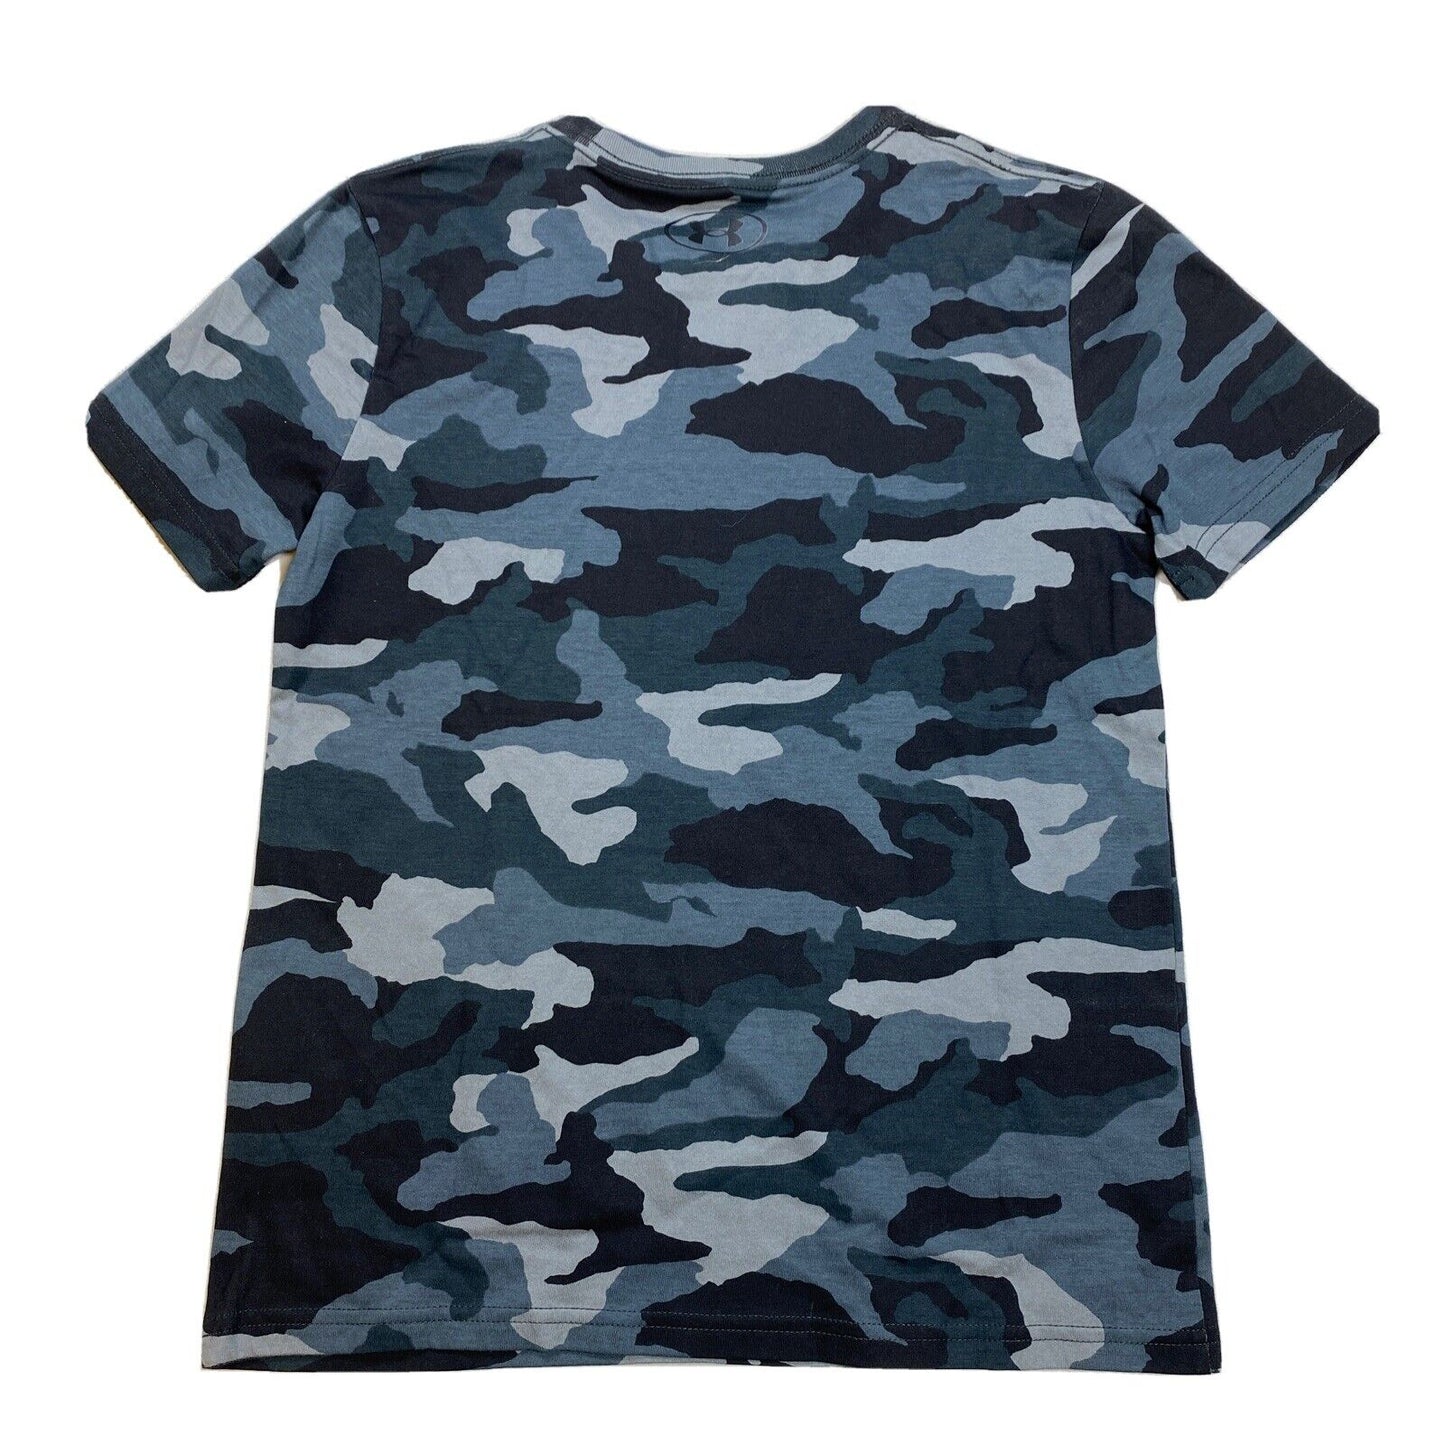 NEW Under Armour Boys Blue/Gray Wisconsin Badgers Short Sleeve T-Shirt - YM